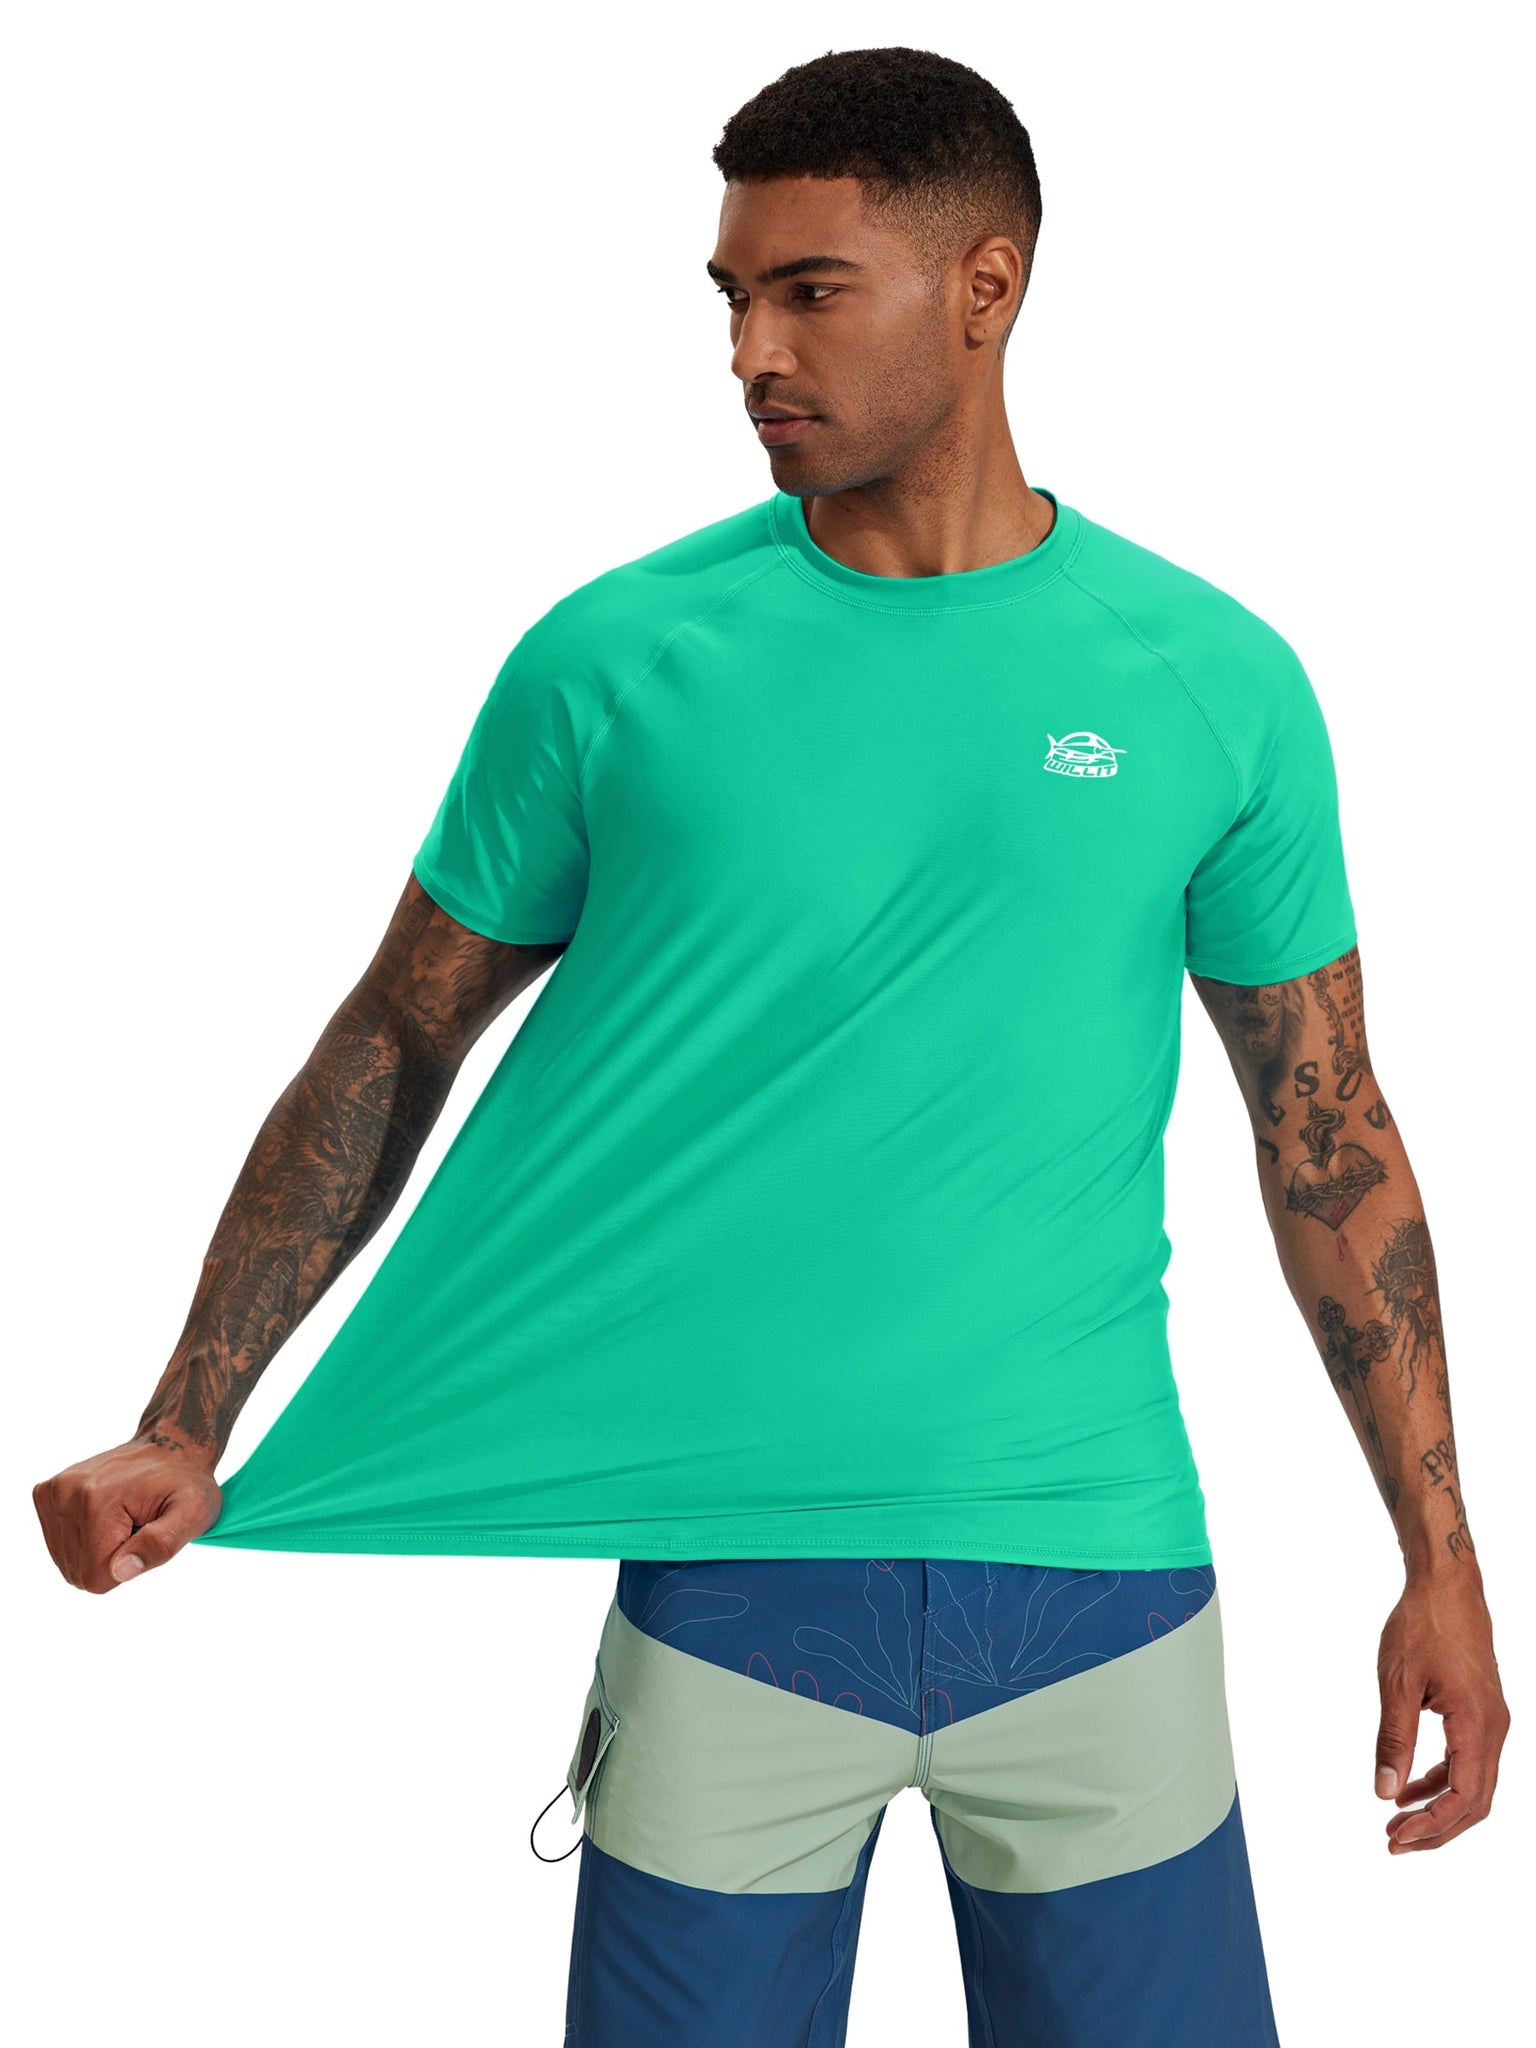 Men's Sun Protection Short Sleeve Shirt_DeepGray_model1